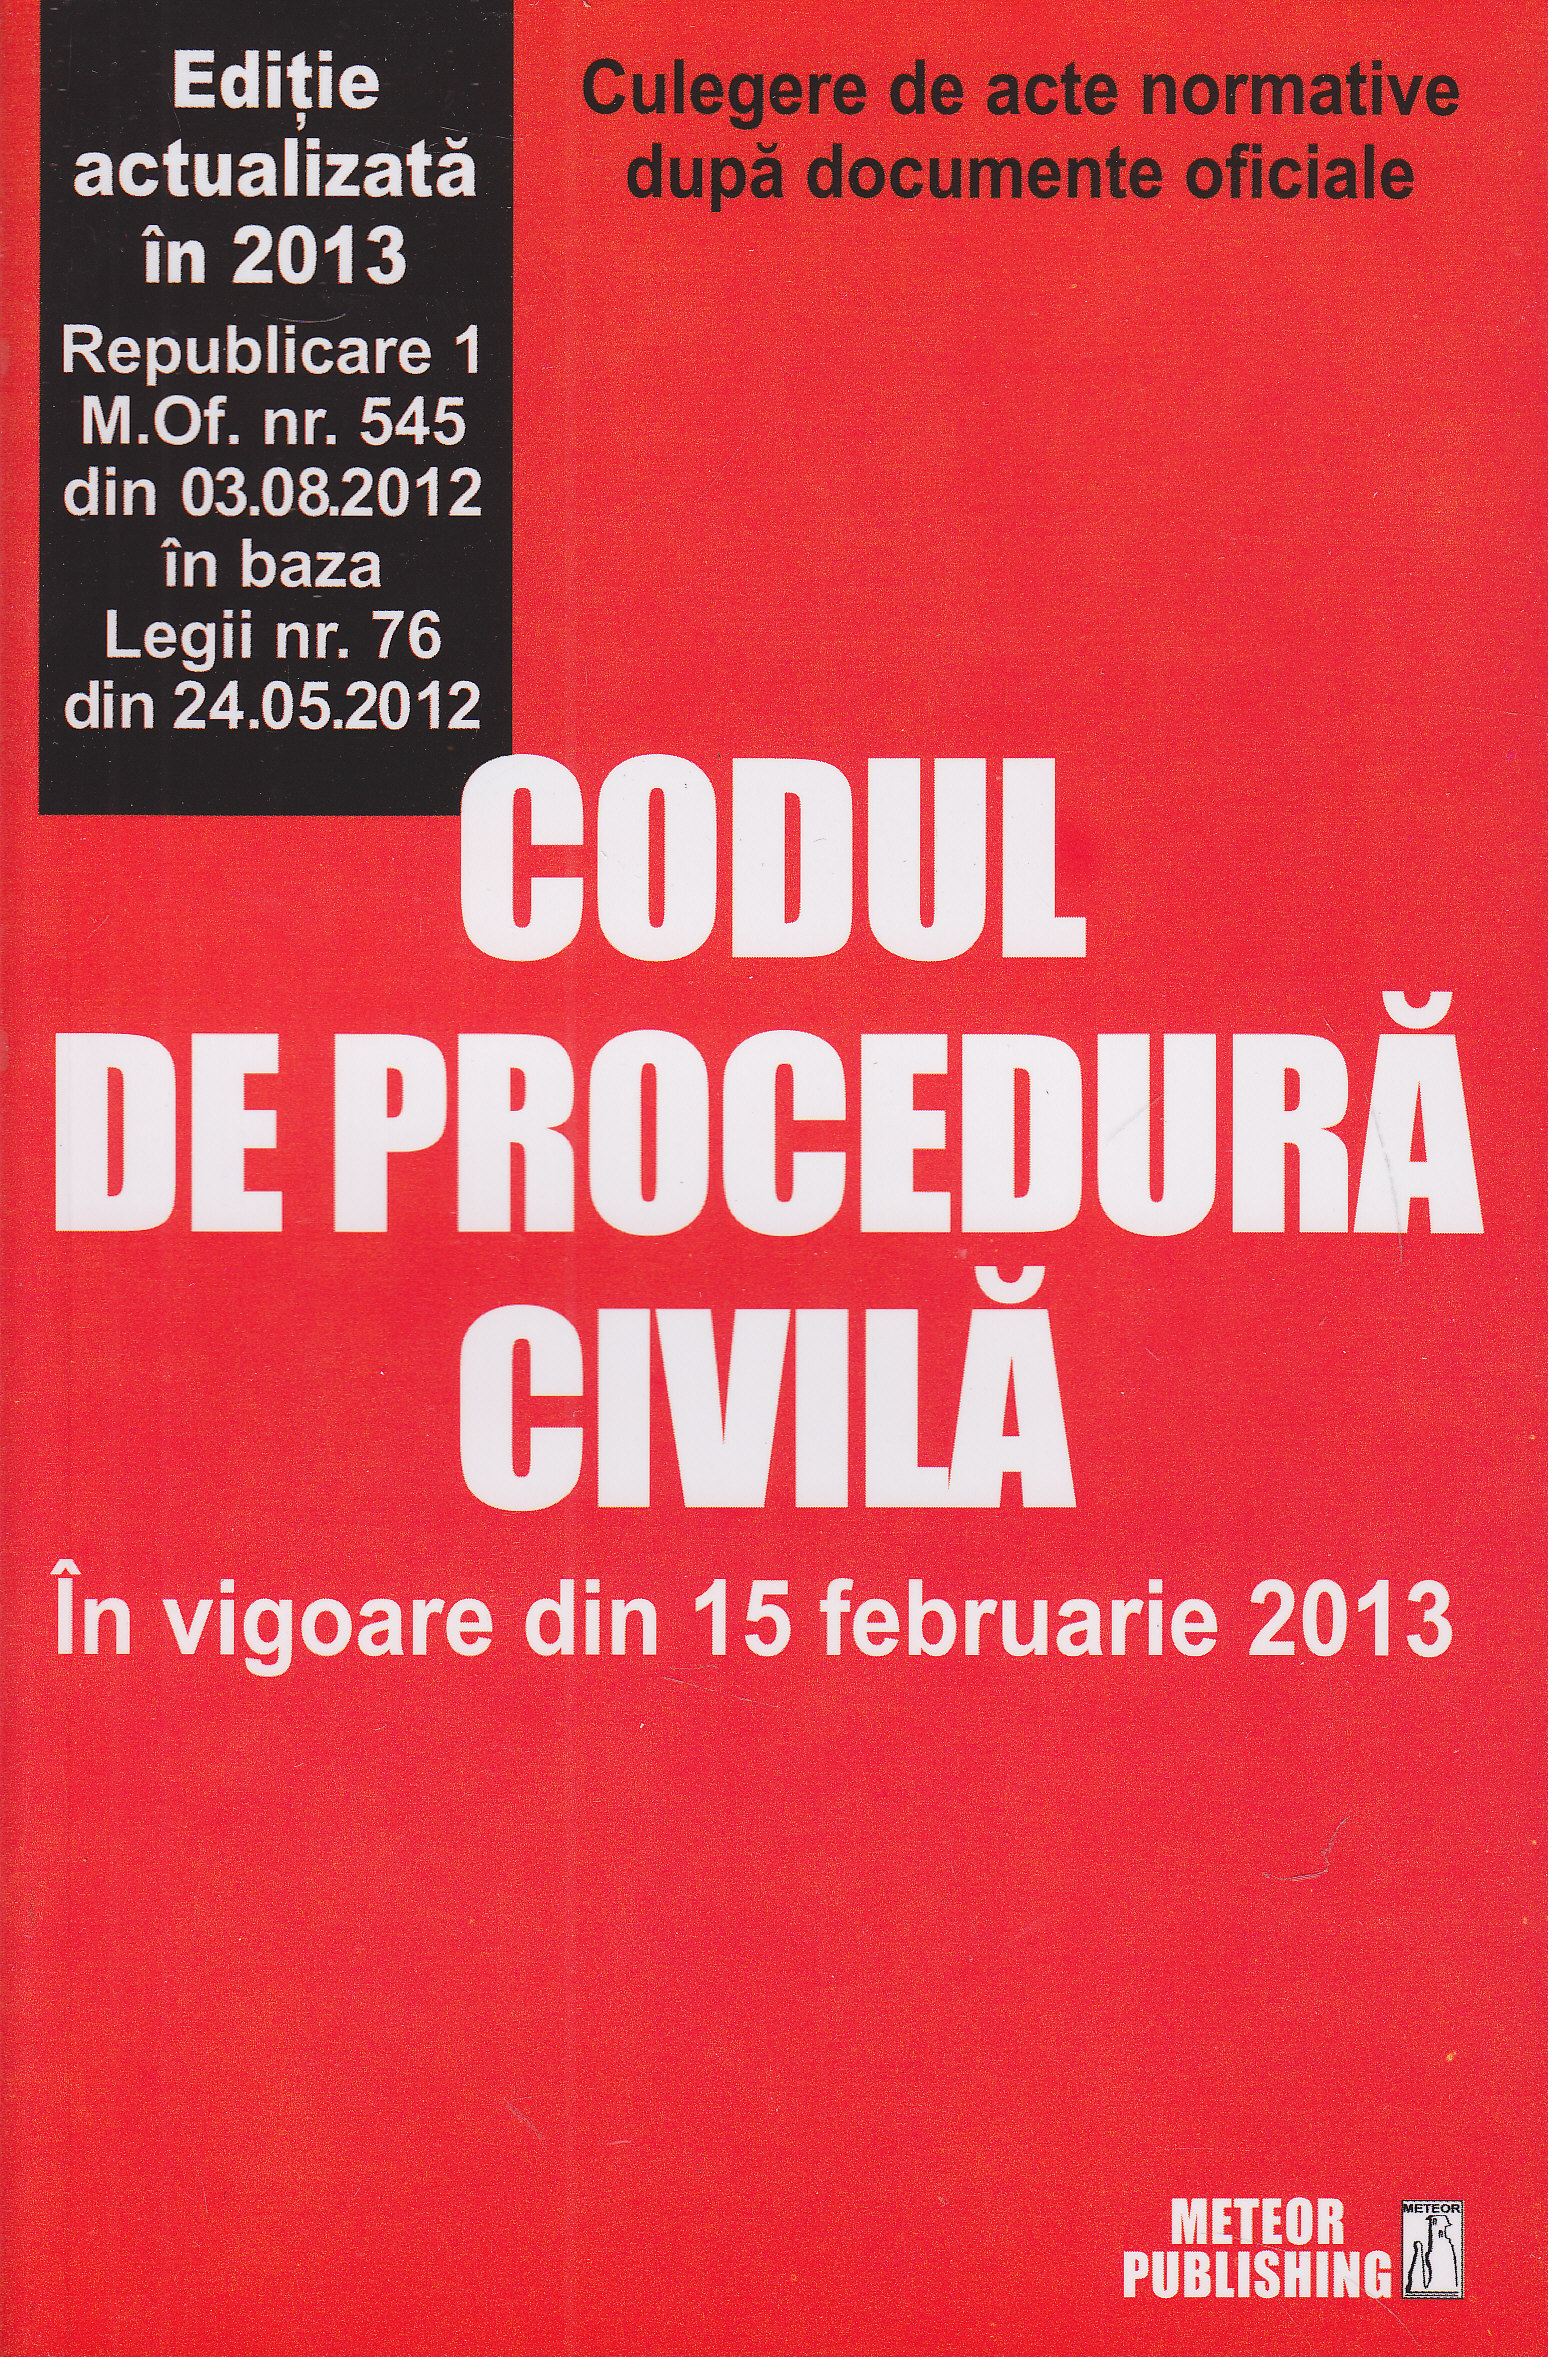 Codul de procedura civila in vigoare din 15 februarie 2013